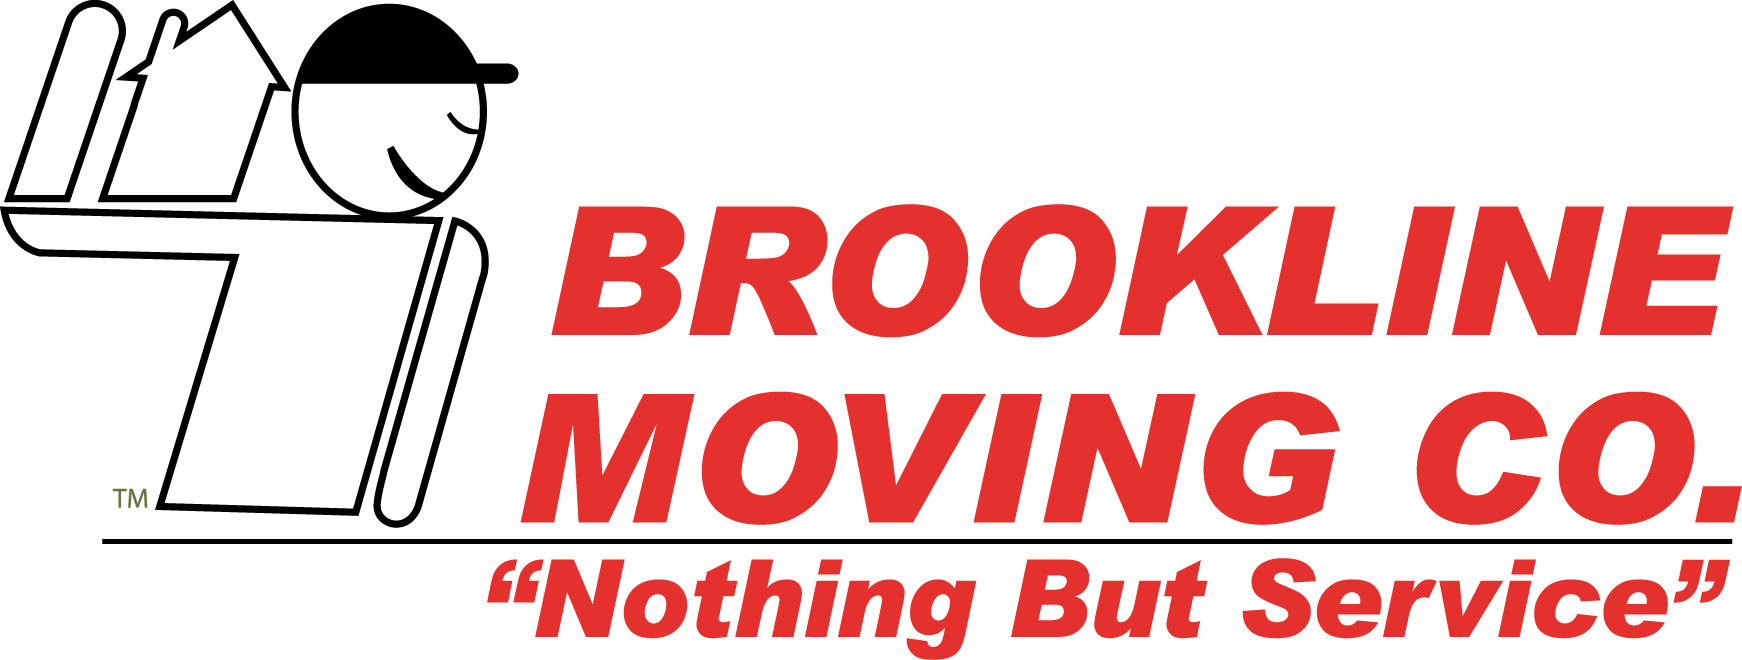 Brookline Moving Company Logo